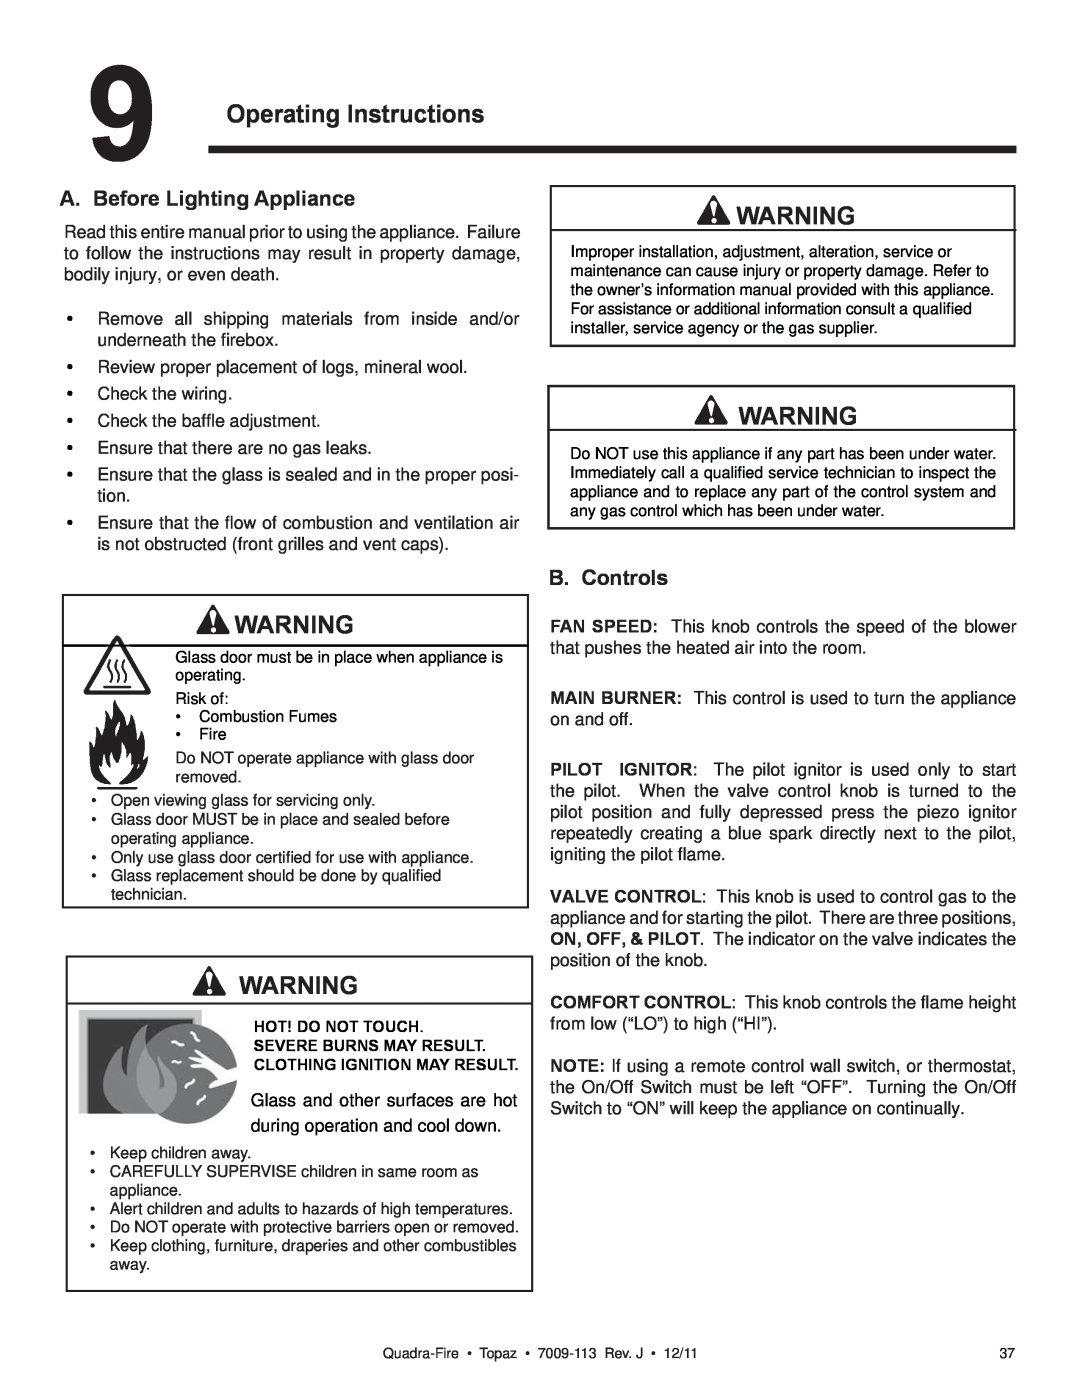 OmniTek 839-1320, 839-1290, 839-1340 owner manual Operating Instructions, A. Before Lighting Appliance, B. Controls 